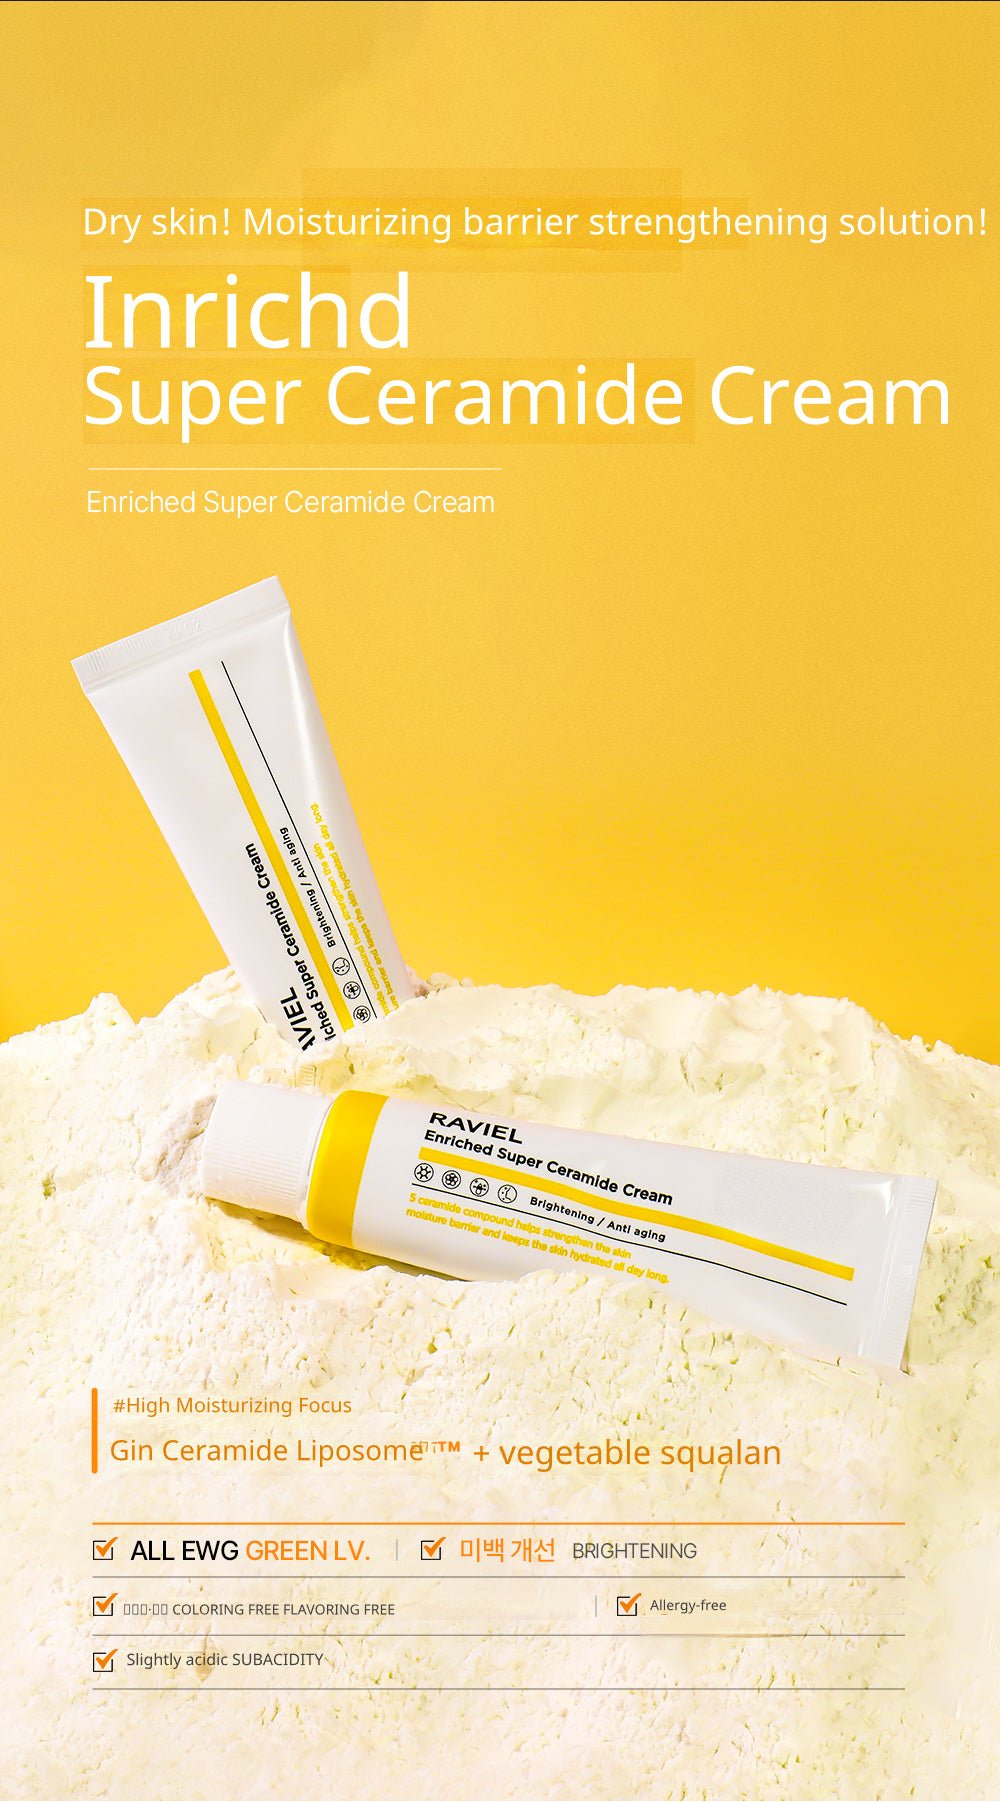 Raviel Enriched Super Ceramide Cream